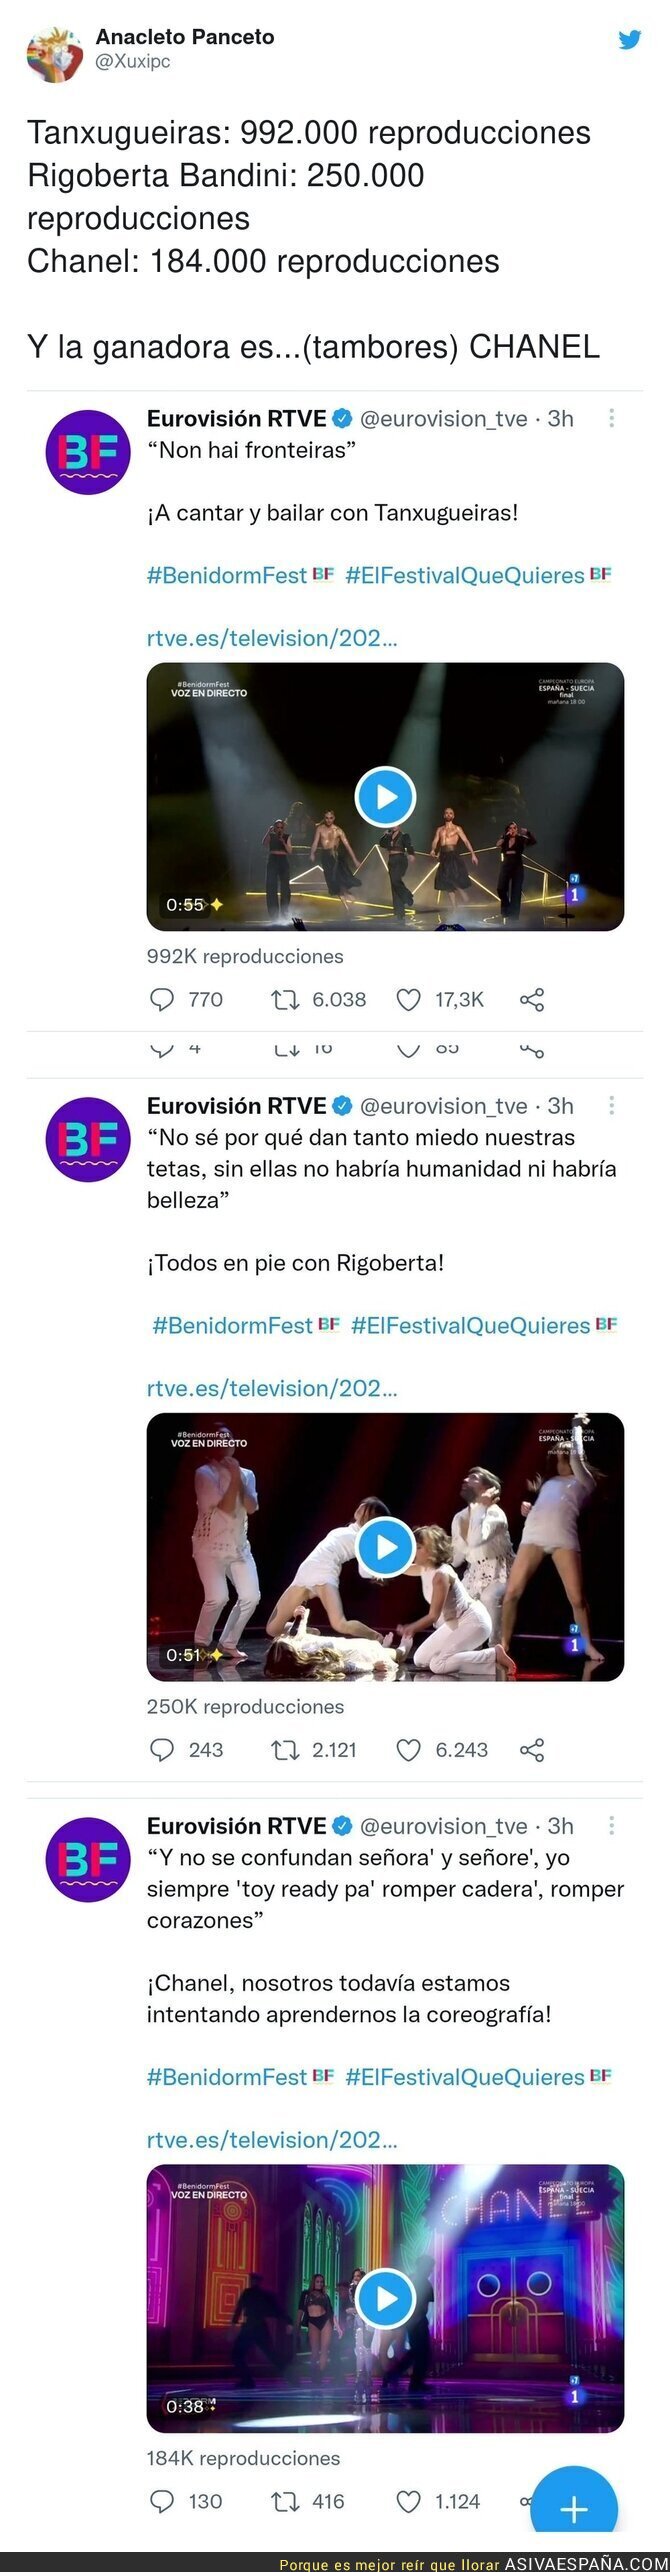 Incomprensible lo de Chanel a Eurovisión